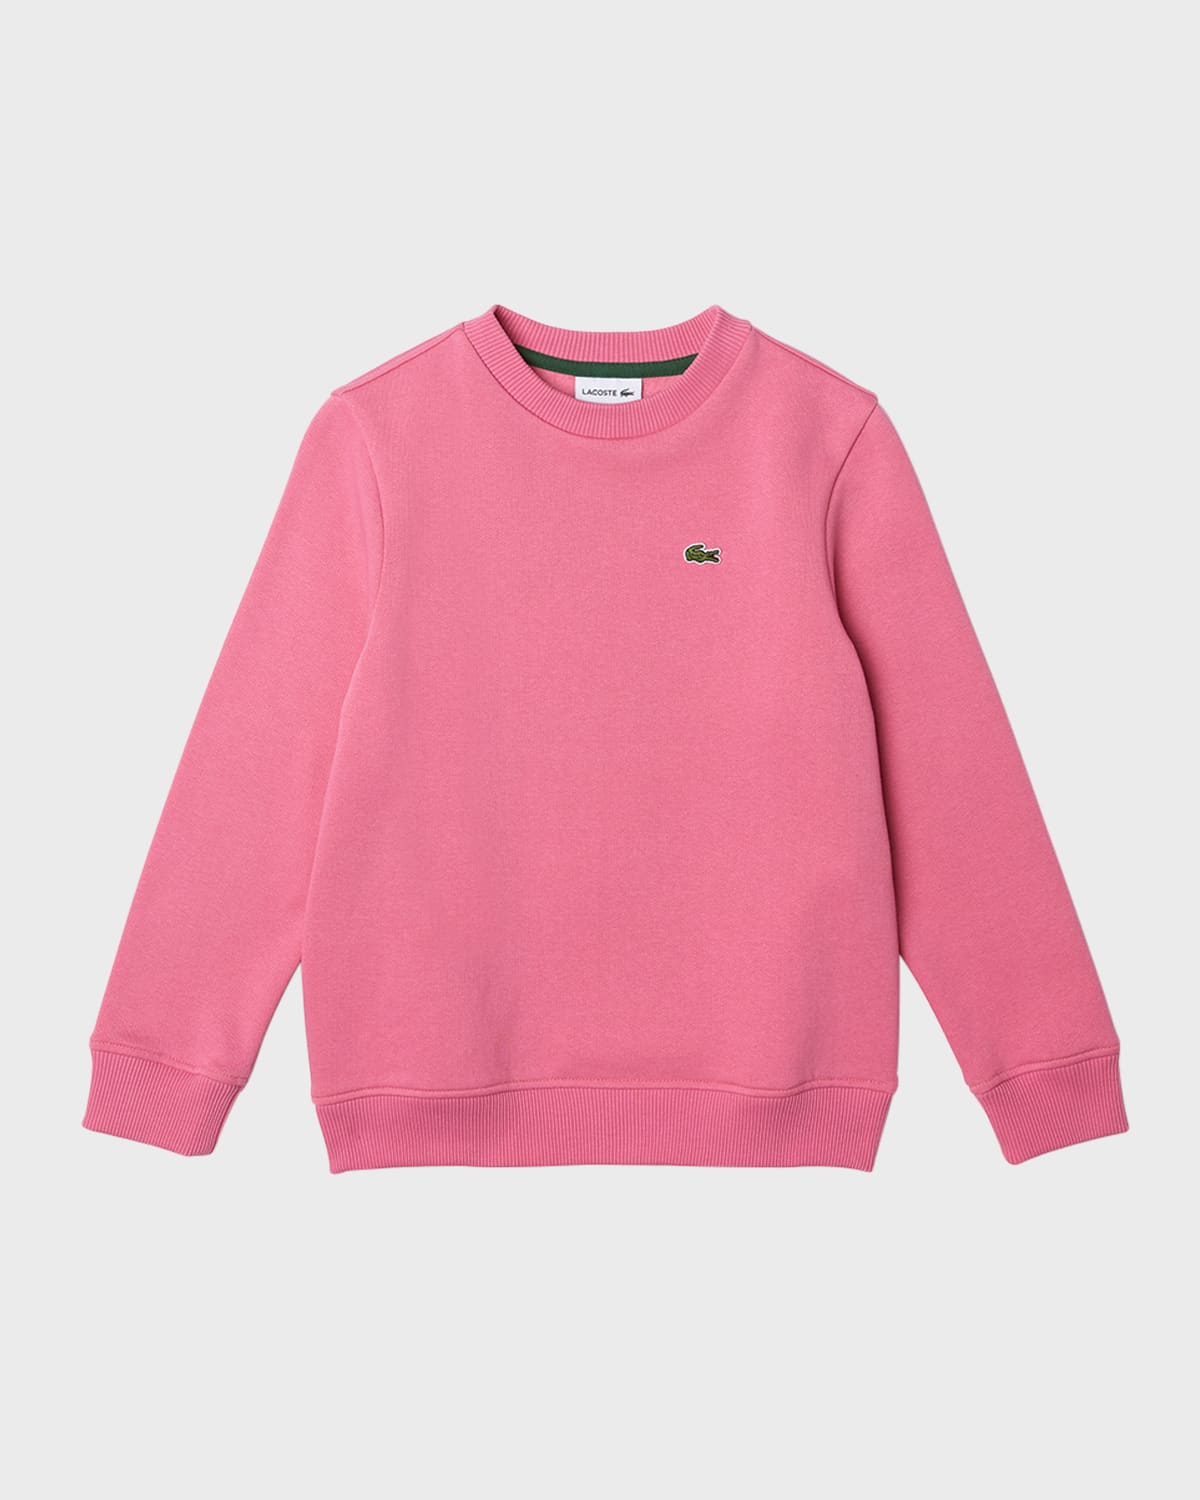 Lacoste Kid's Embroidered Crocodile Crewneck Sweatshirt In Medium Pink